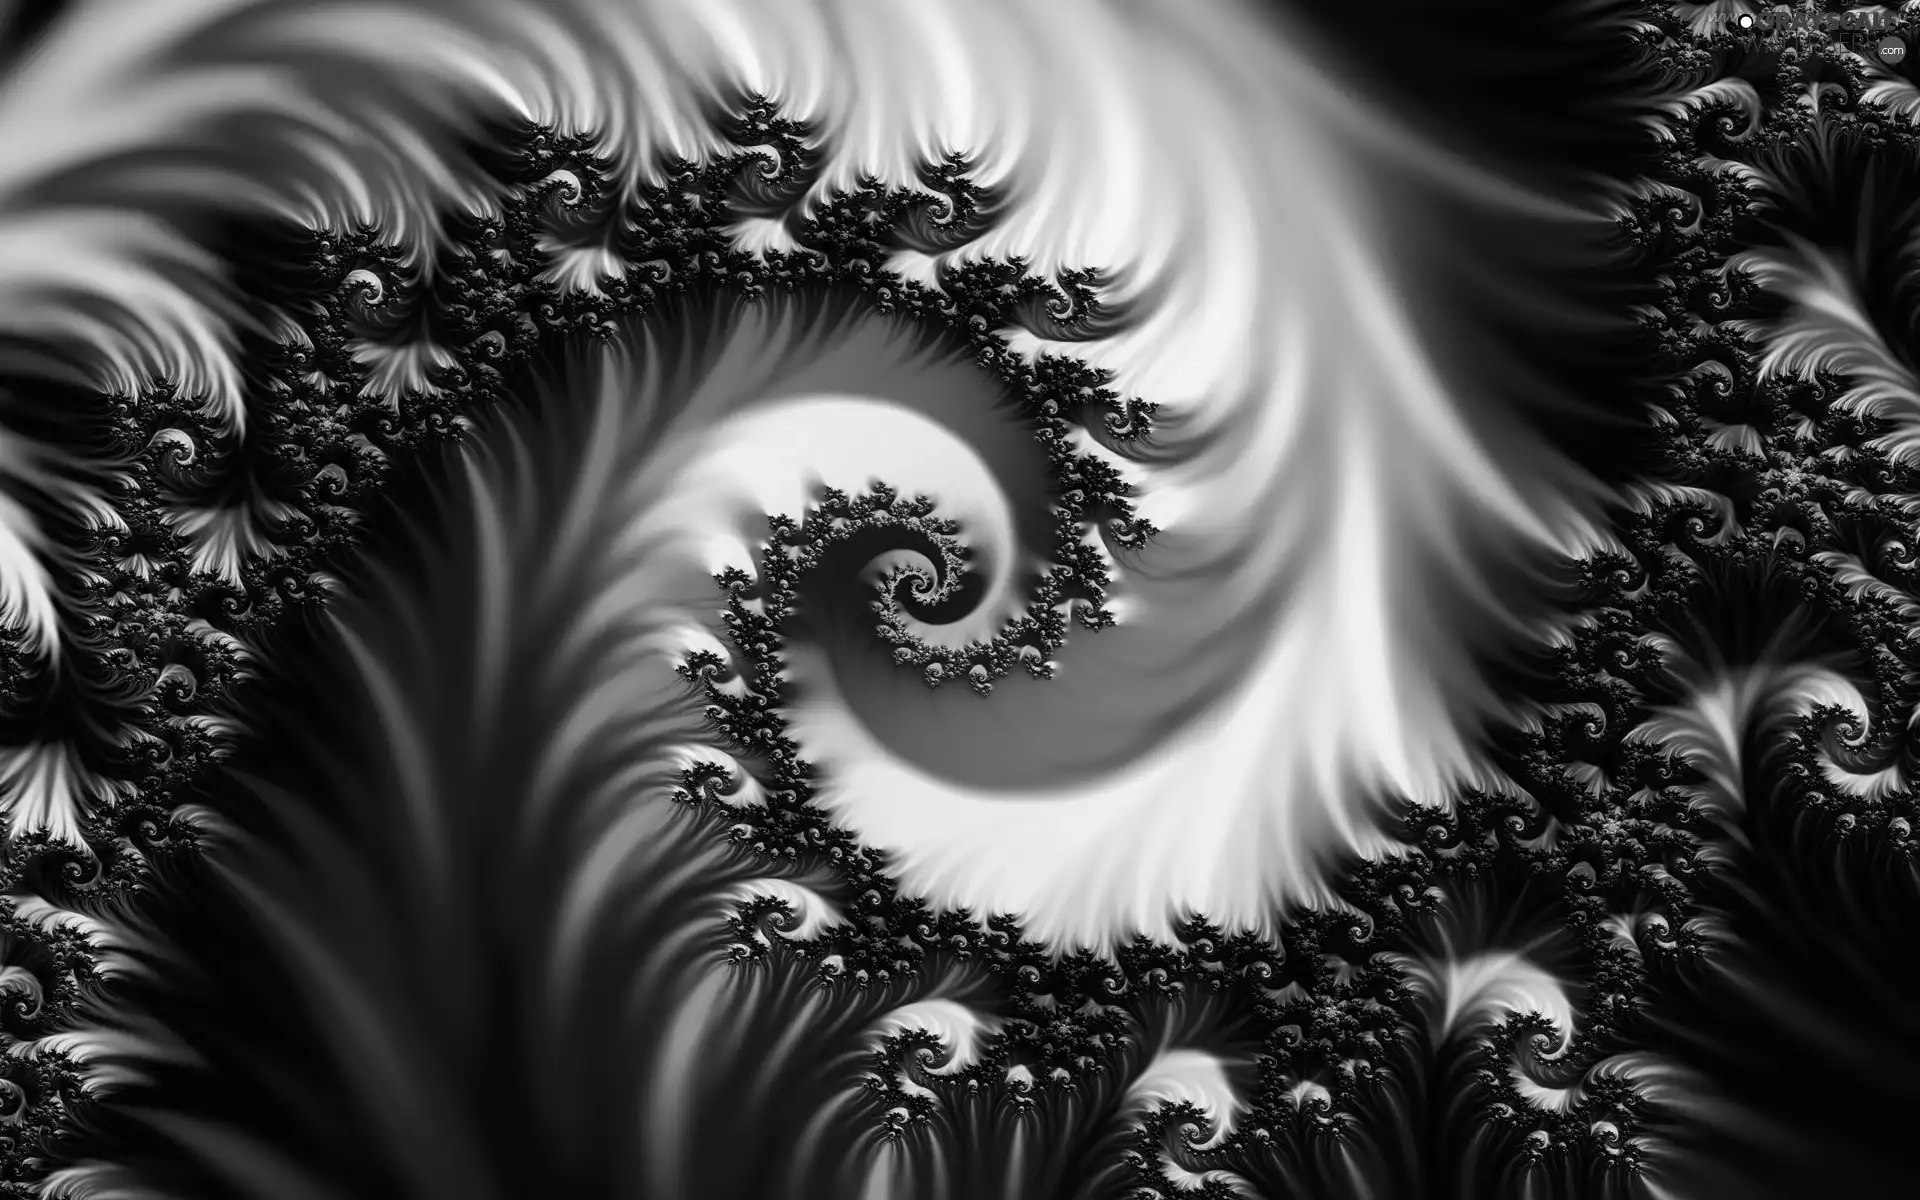 Fraktal, spirals